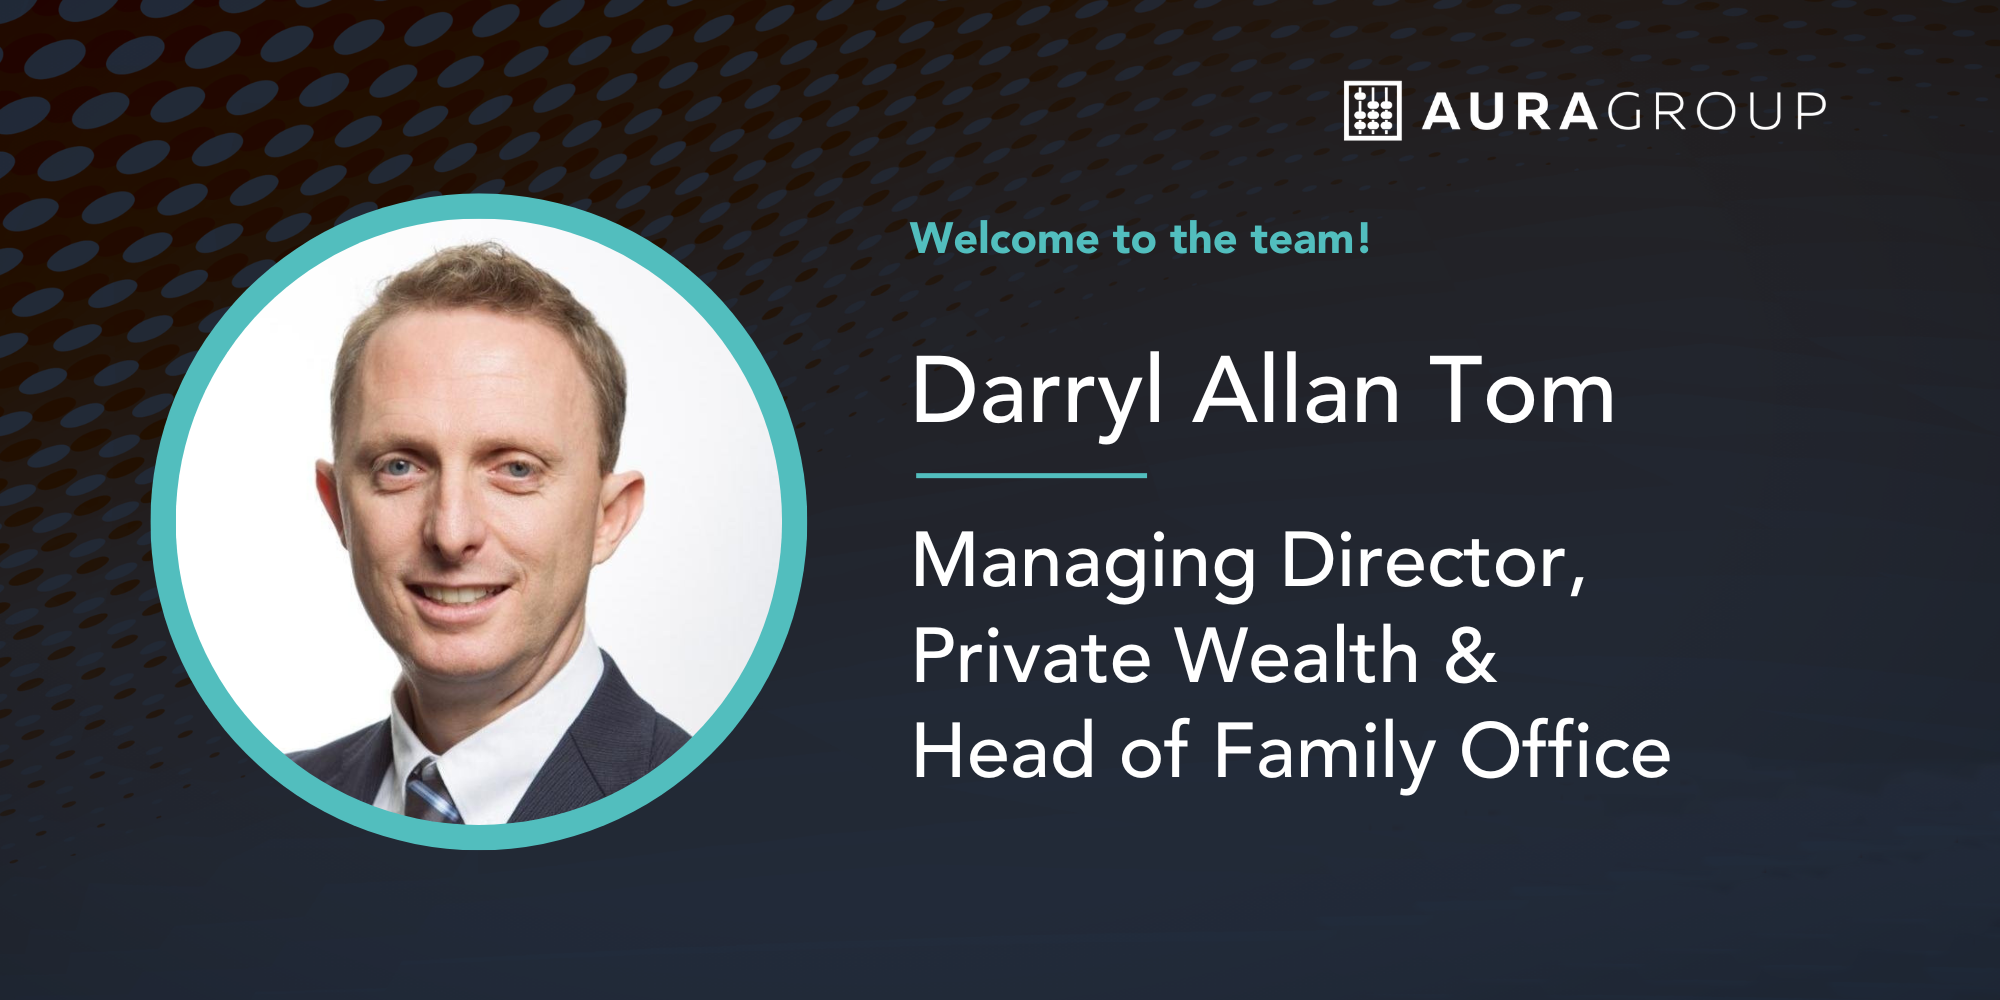 Darryl Allan Tom joins Aura Group